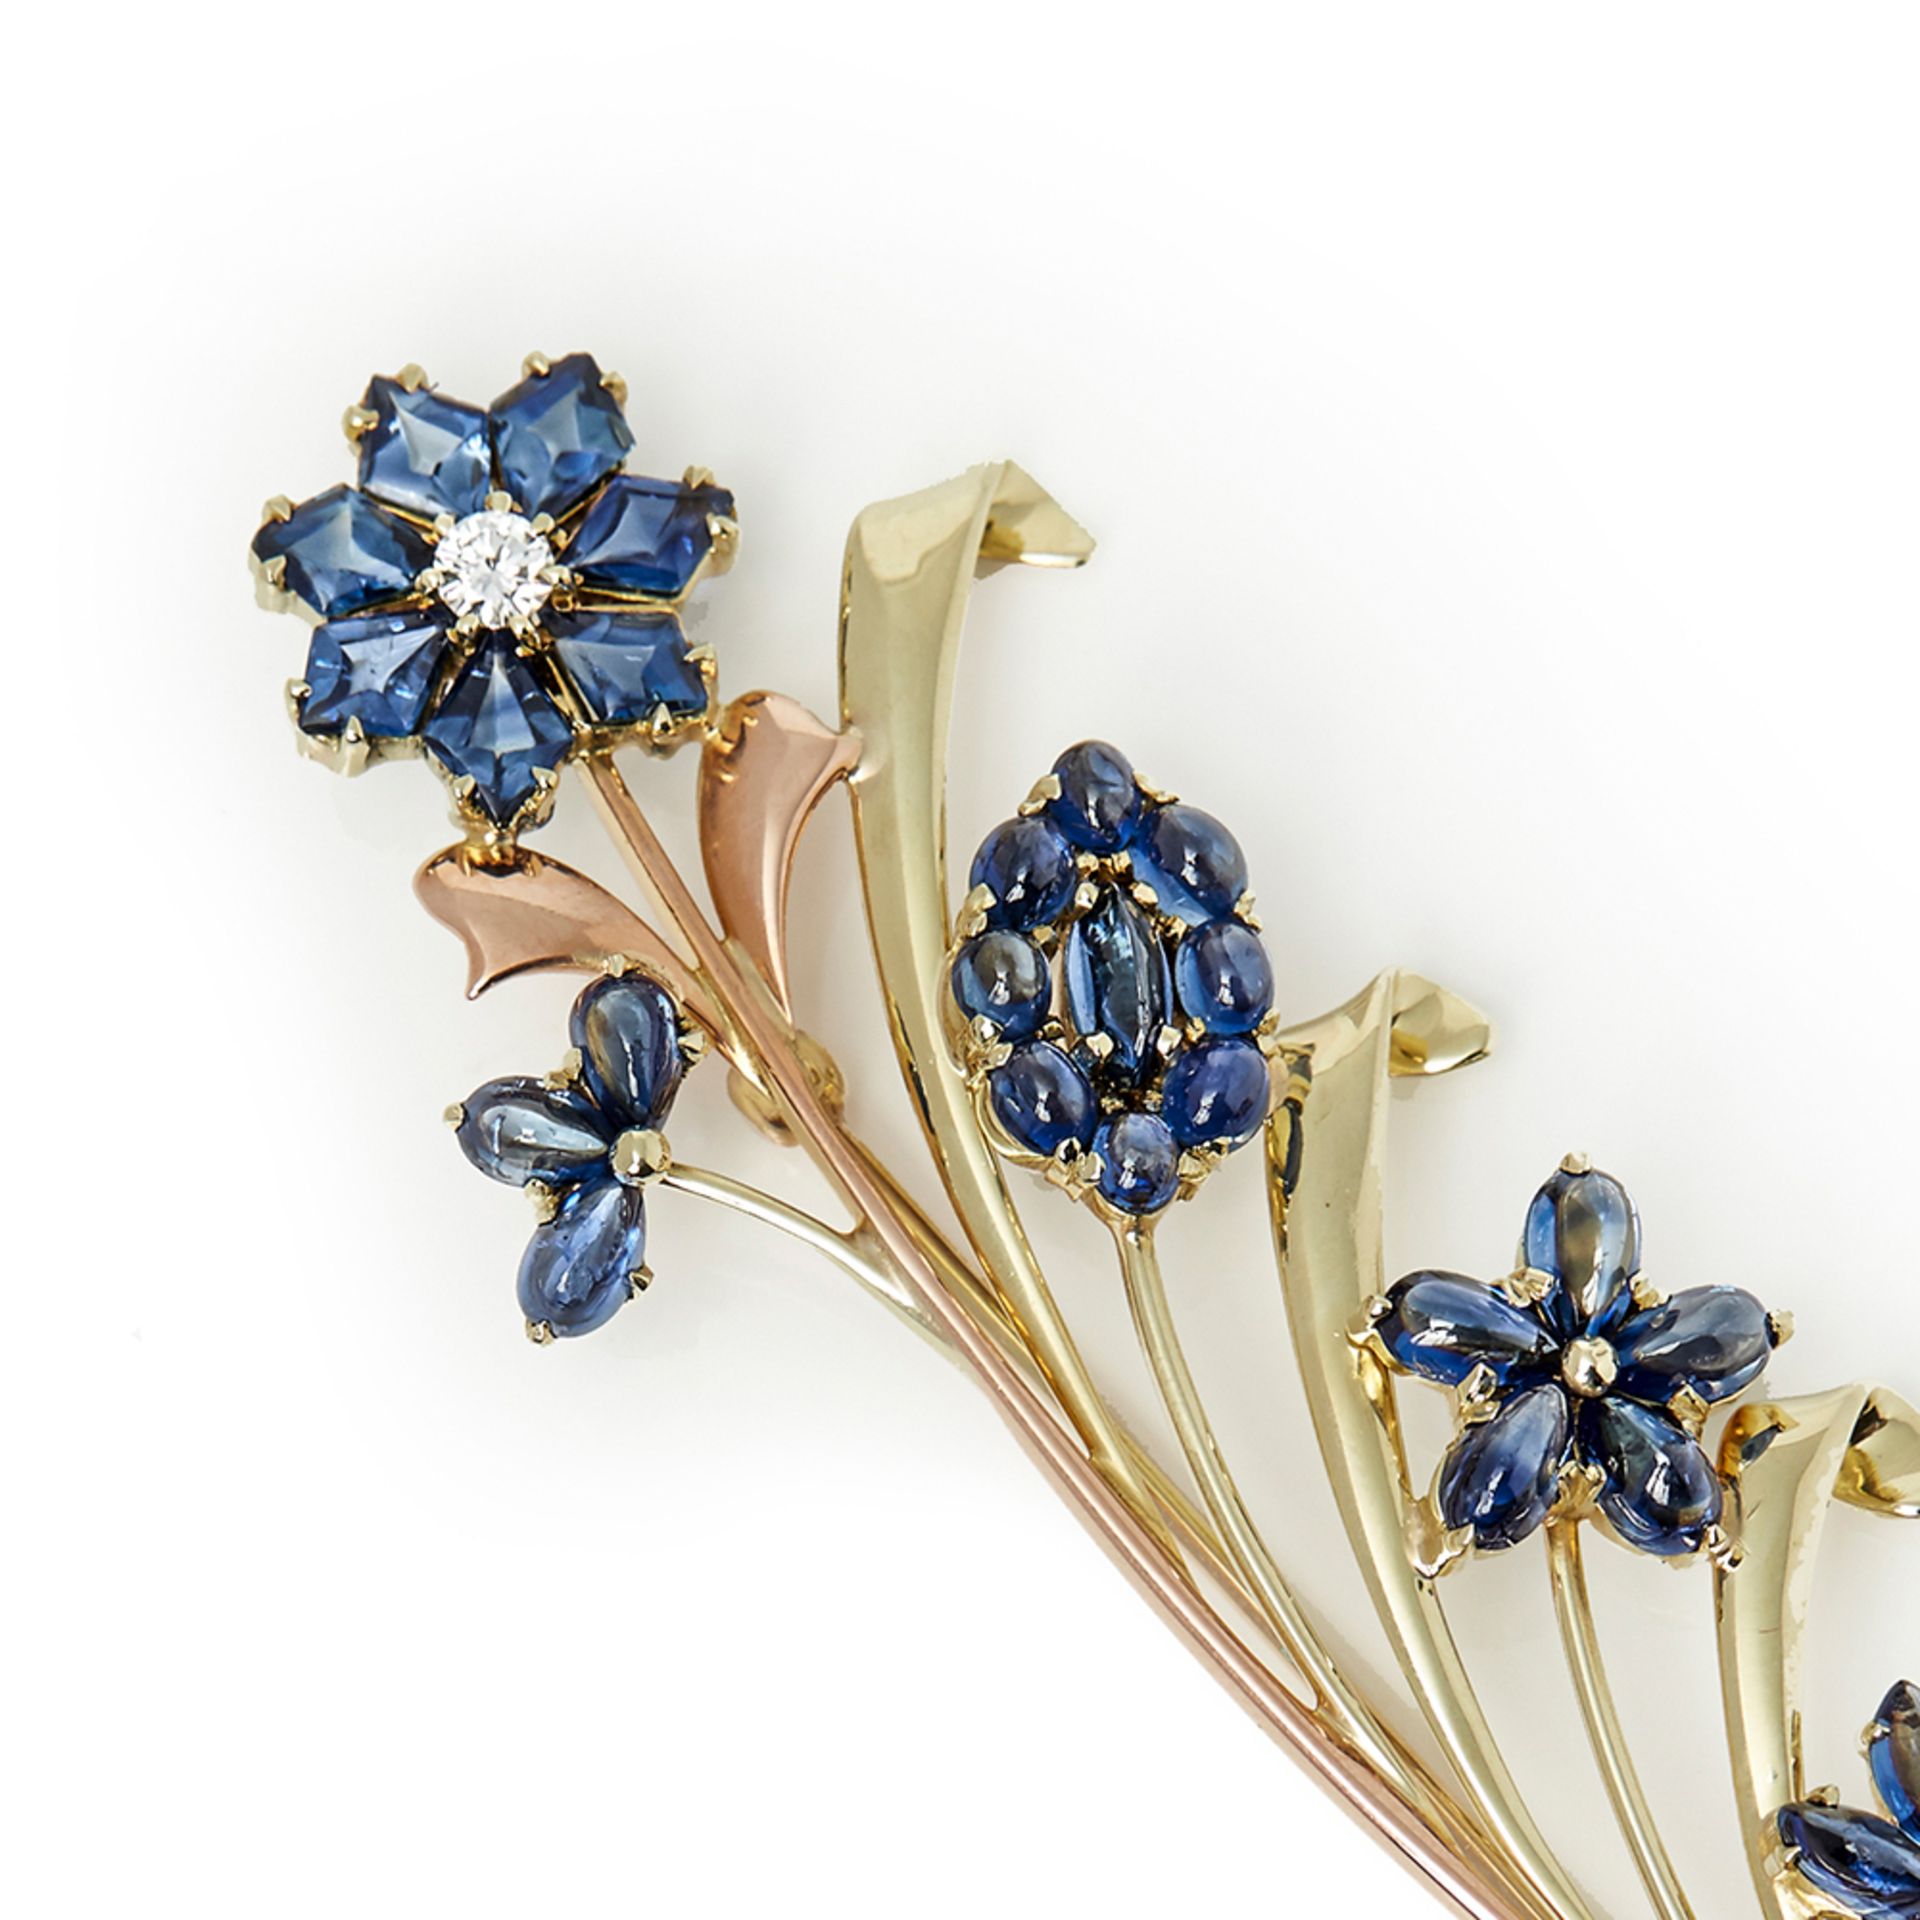 Tiffany & Co. 14k Yellow & Rose Gold Sapphire & Diamond Retro Brooch - Image 2 of 7